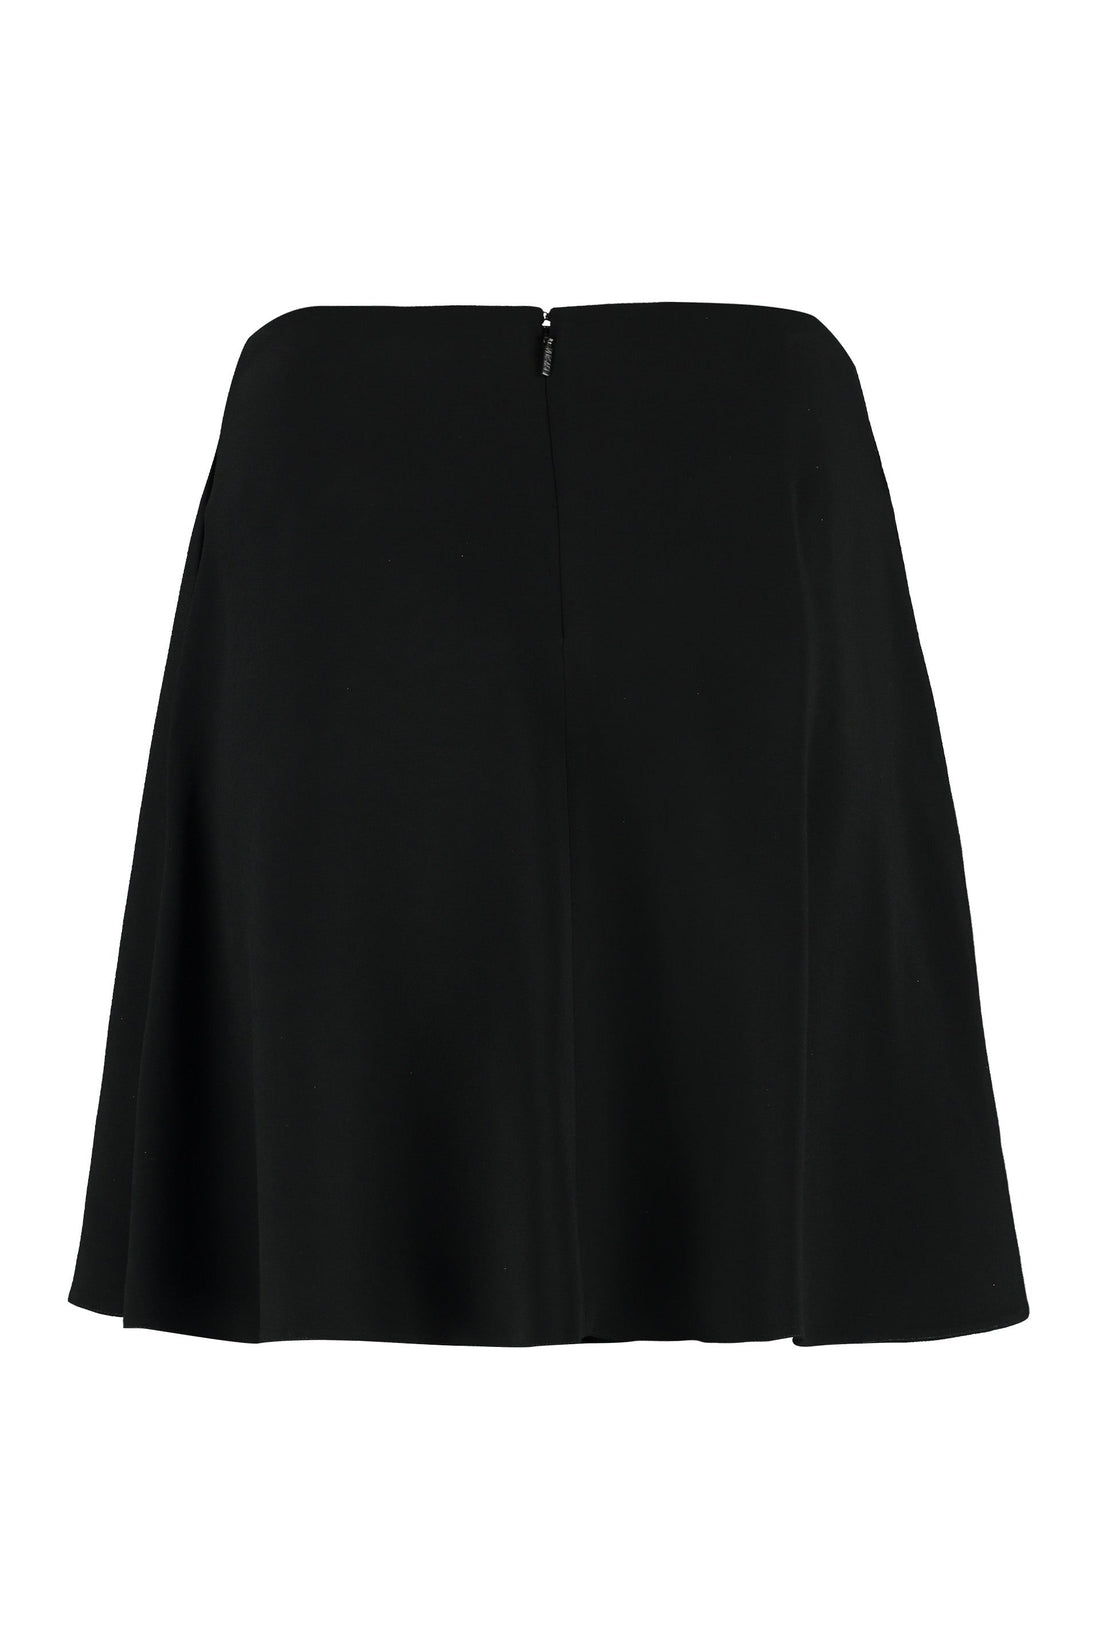 Versace-OUTLET-SALE-Pleated mini skirt-ARCHIVIST